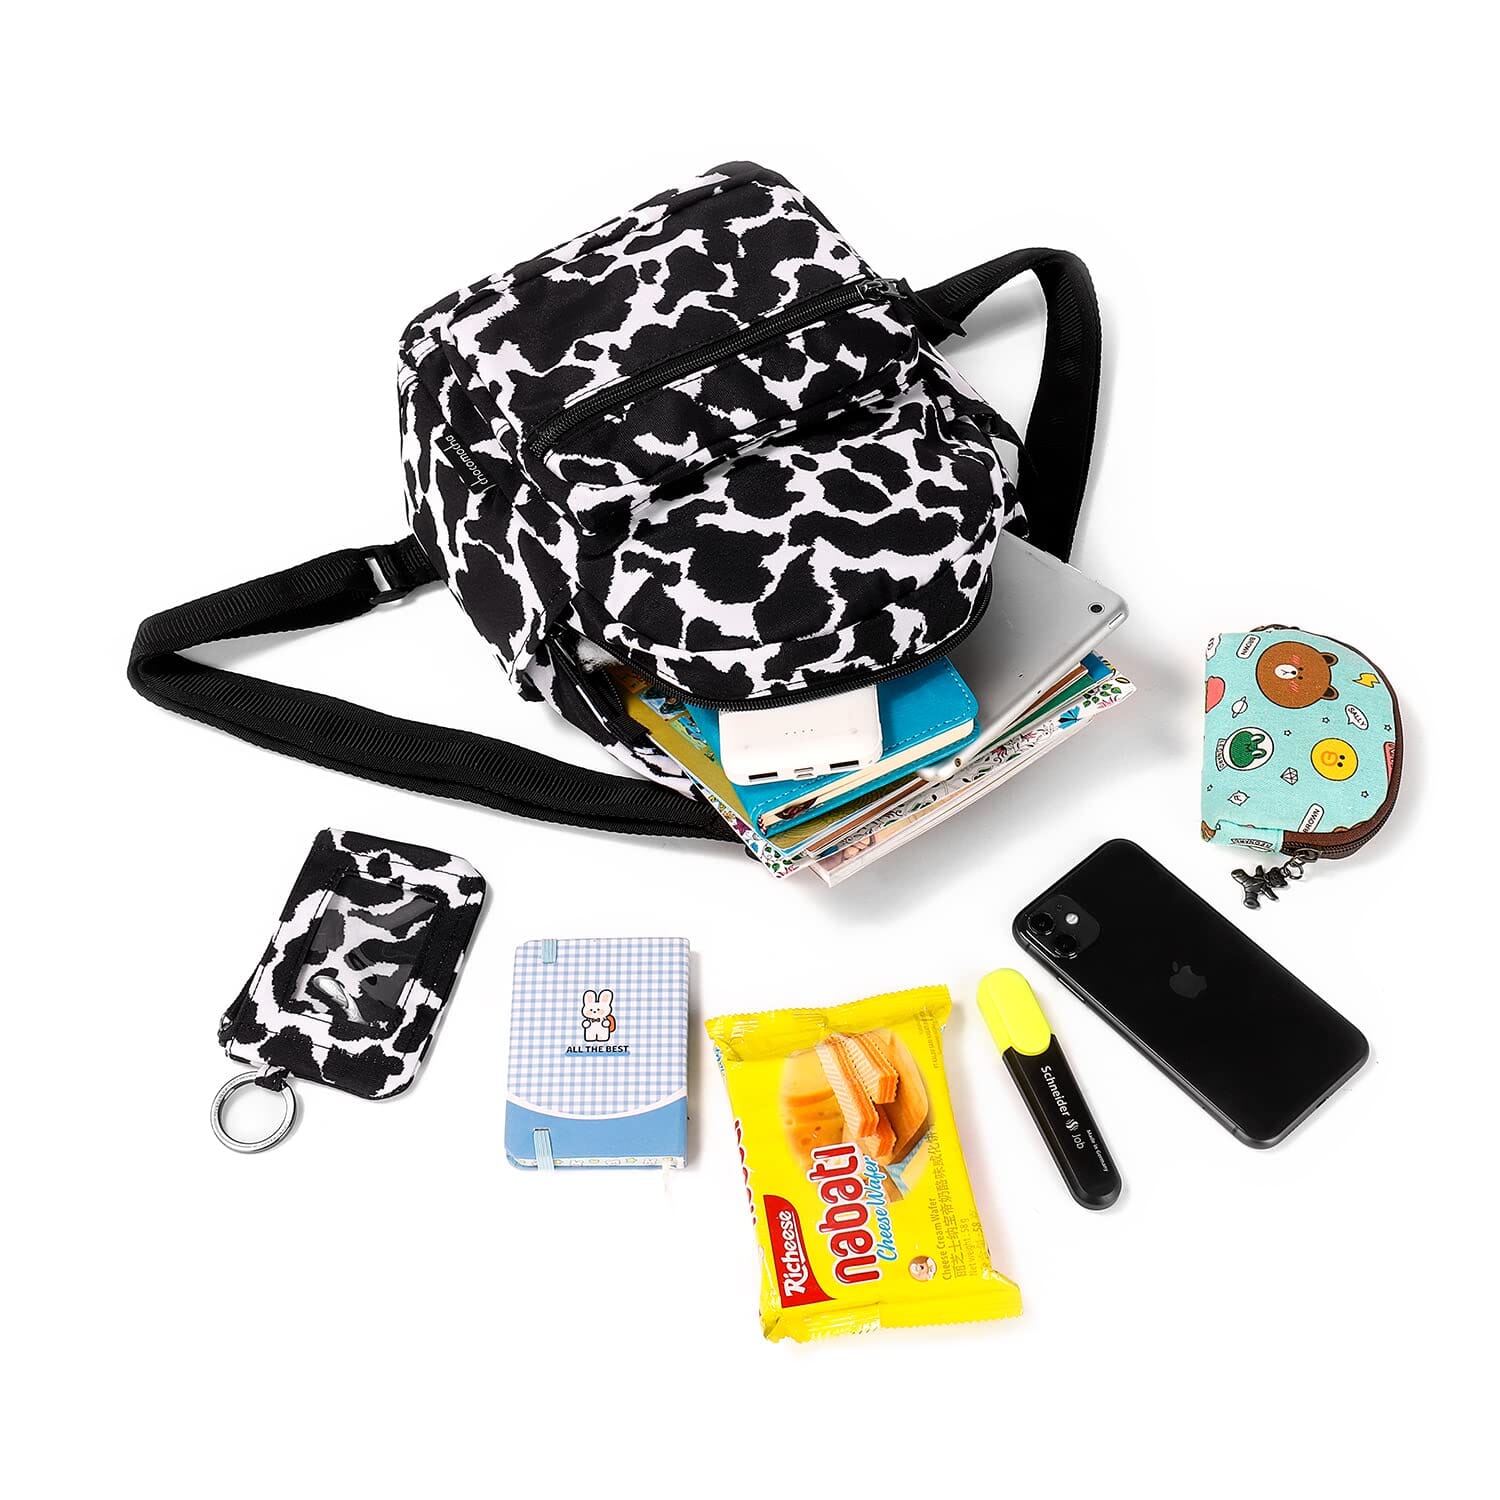 Choco Mocha Black Small Backpack for Girls and Women Teen, Kids Mini Backpack Purse Cute Little Girls Backpack School Travel Bookbag, Cow Print chocomochakids 